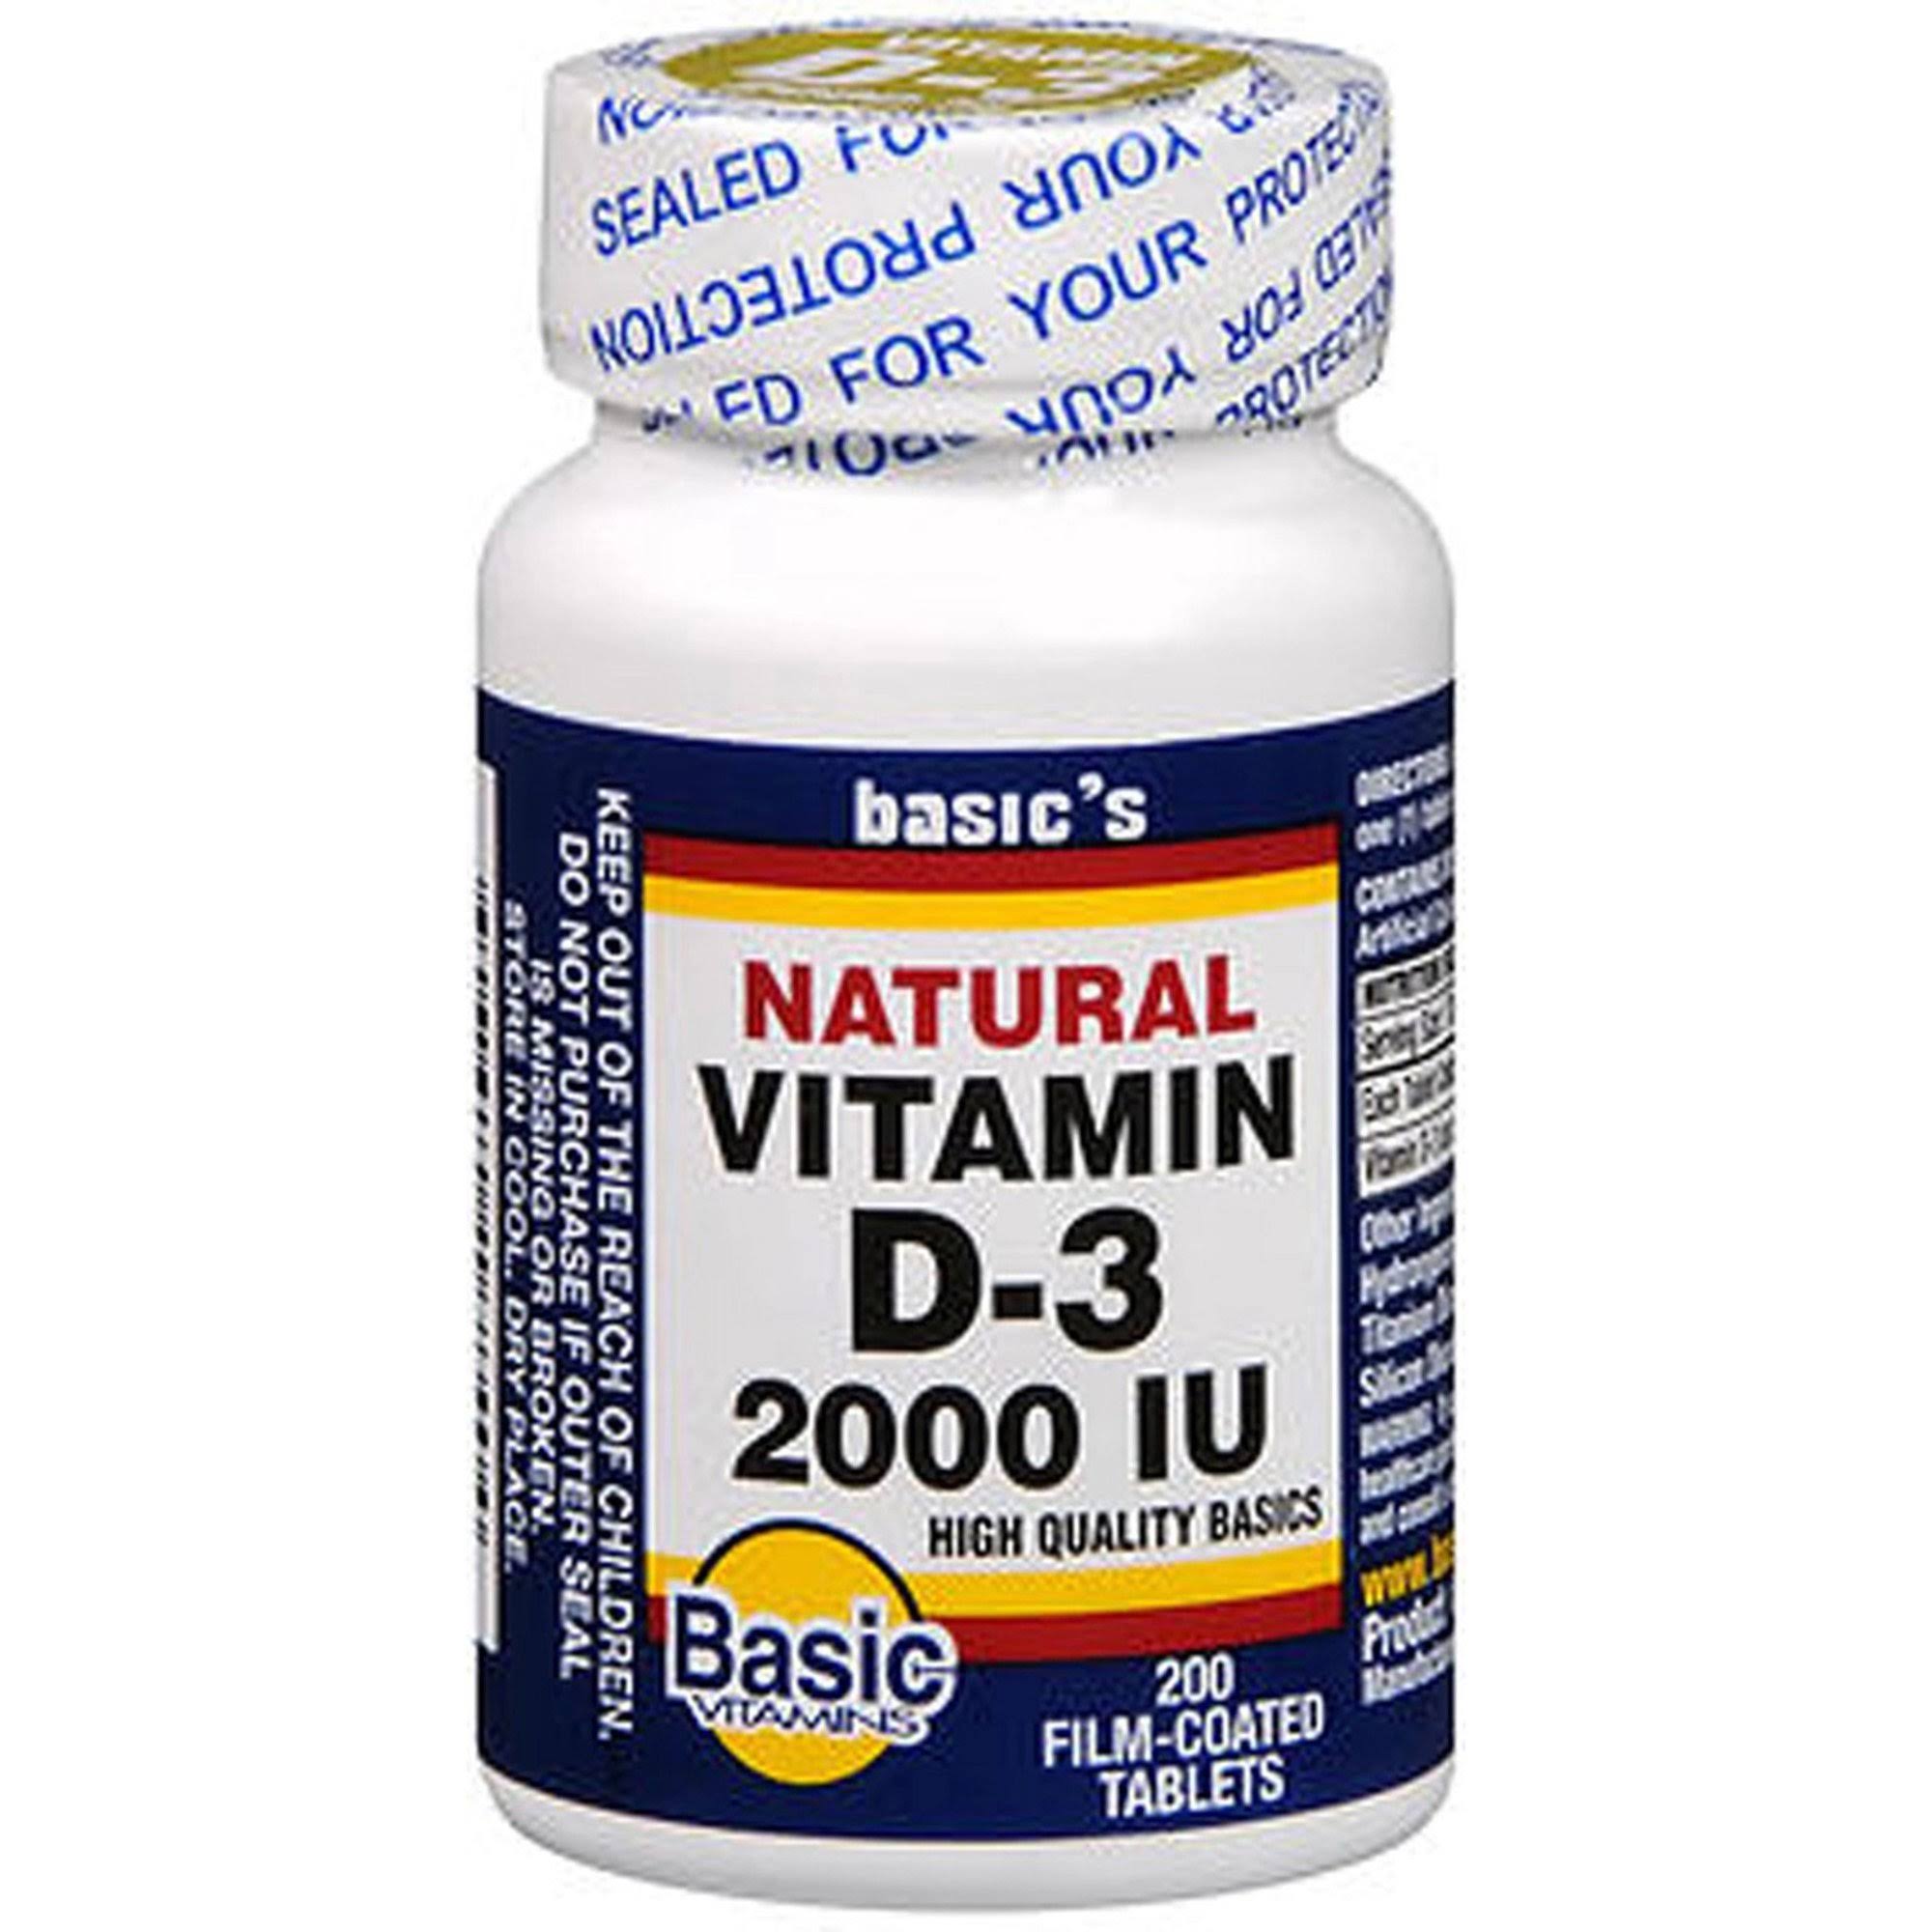 Basic Vitamins Natural Vitamin D-3 2000 IU - 200 Film-Coated tablets